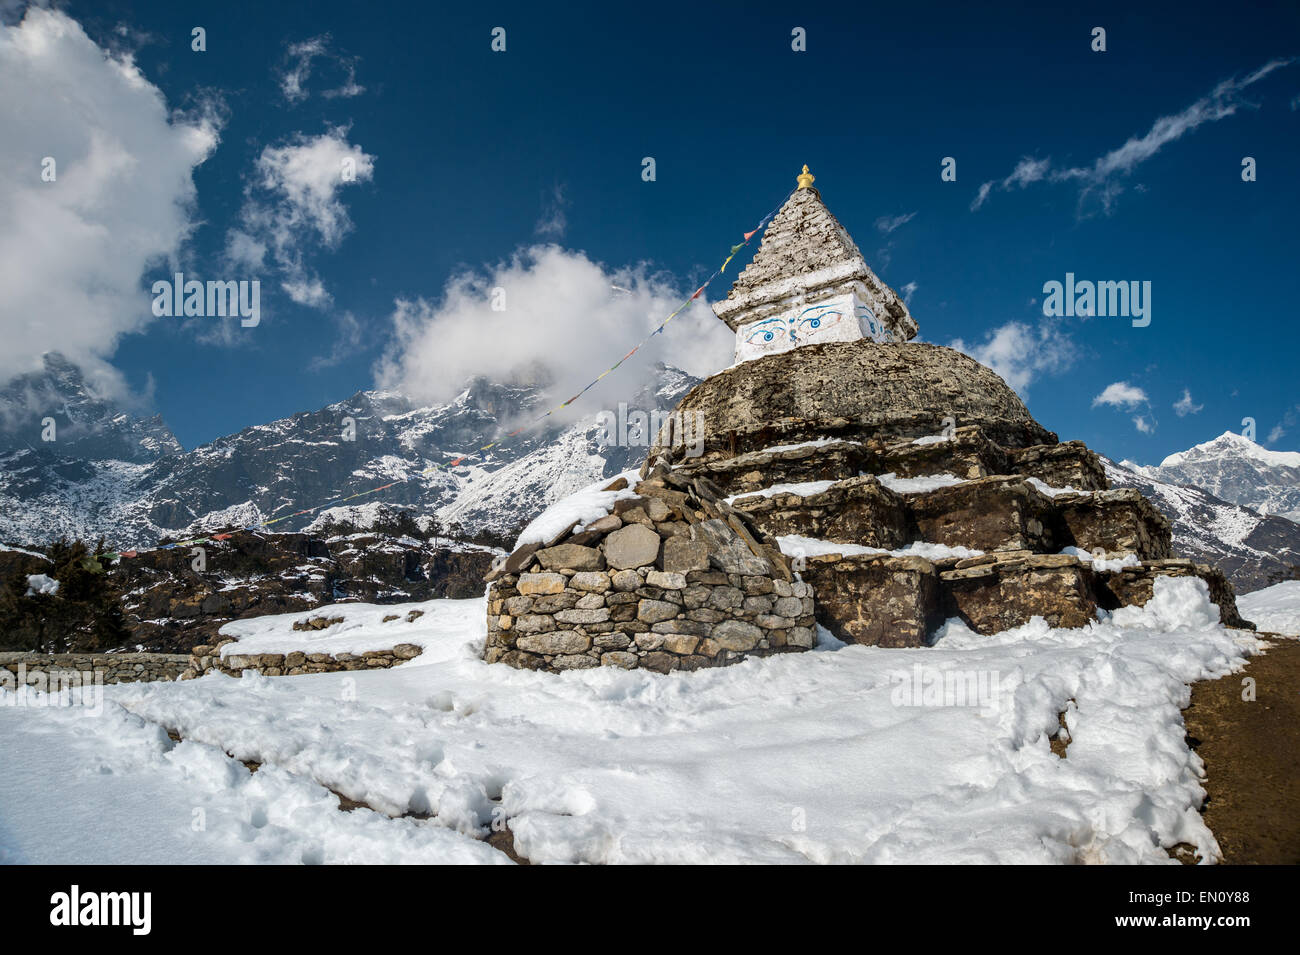 Sagarmatha National Park, Nepal - 9 March 2015: Stupa in the himalayas region Stock Photo